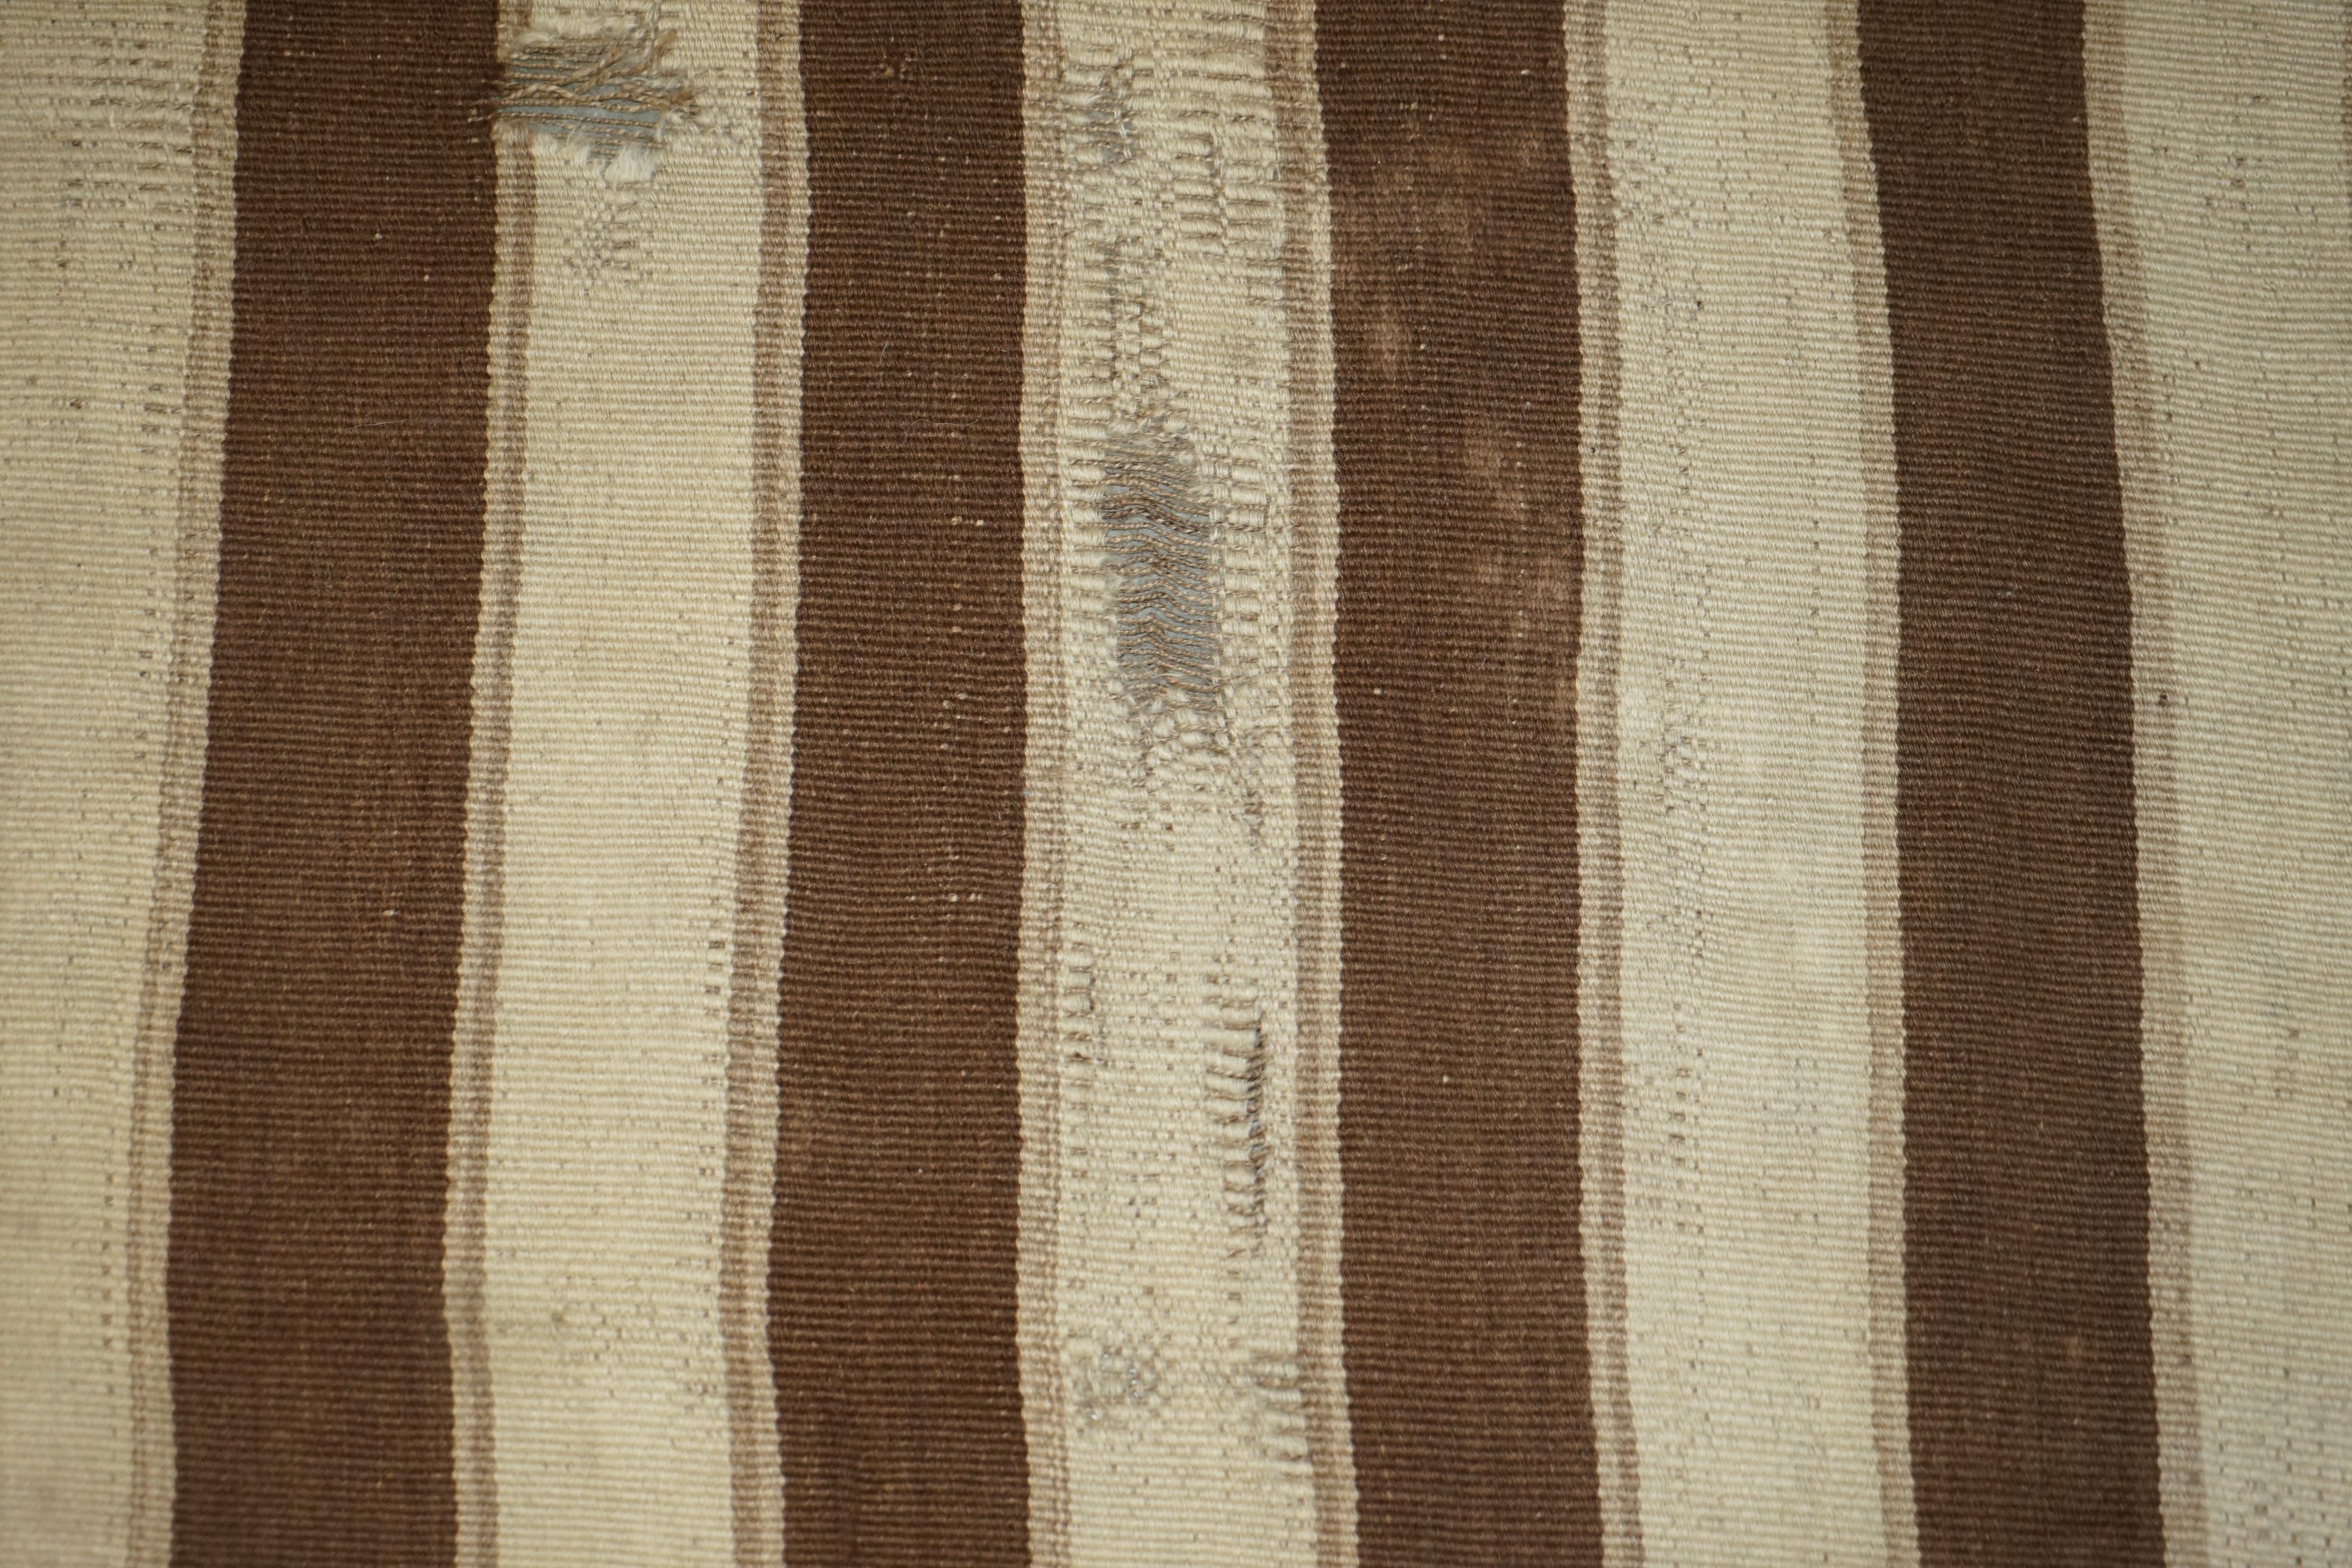 Antique Distressed 1880 Huge Handwoven American Indian Carpet Rug For Sale 7